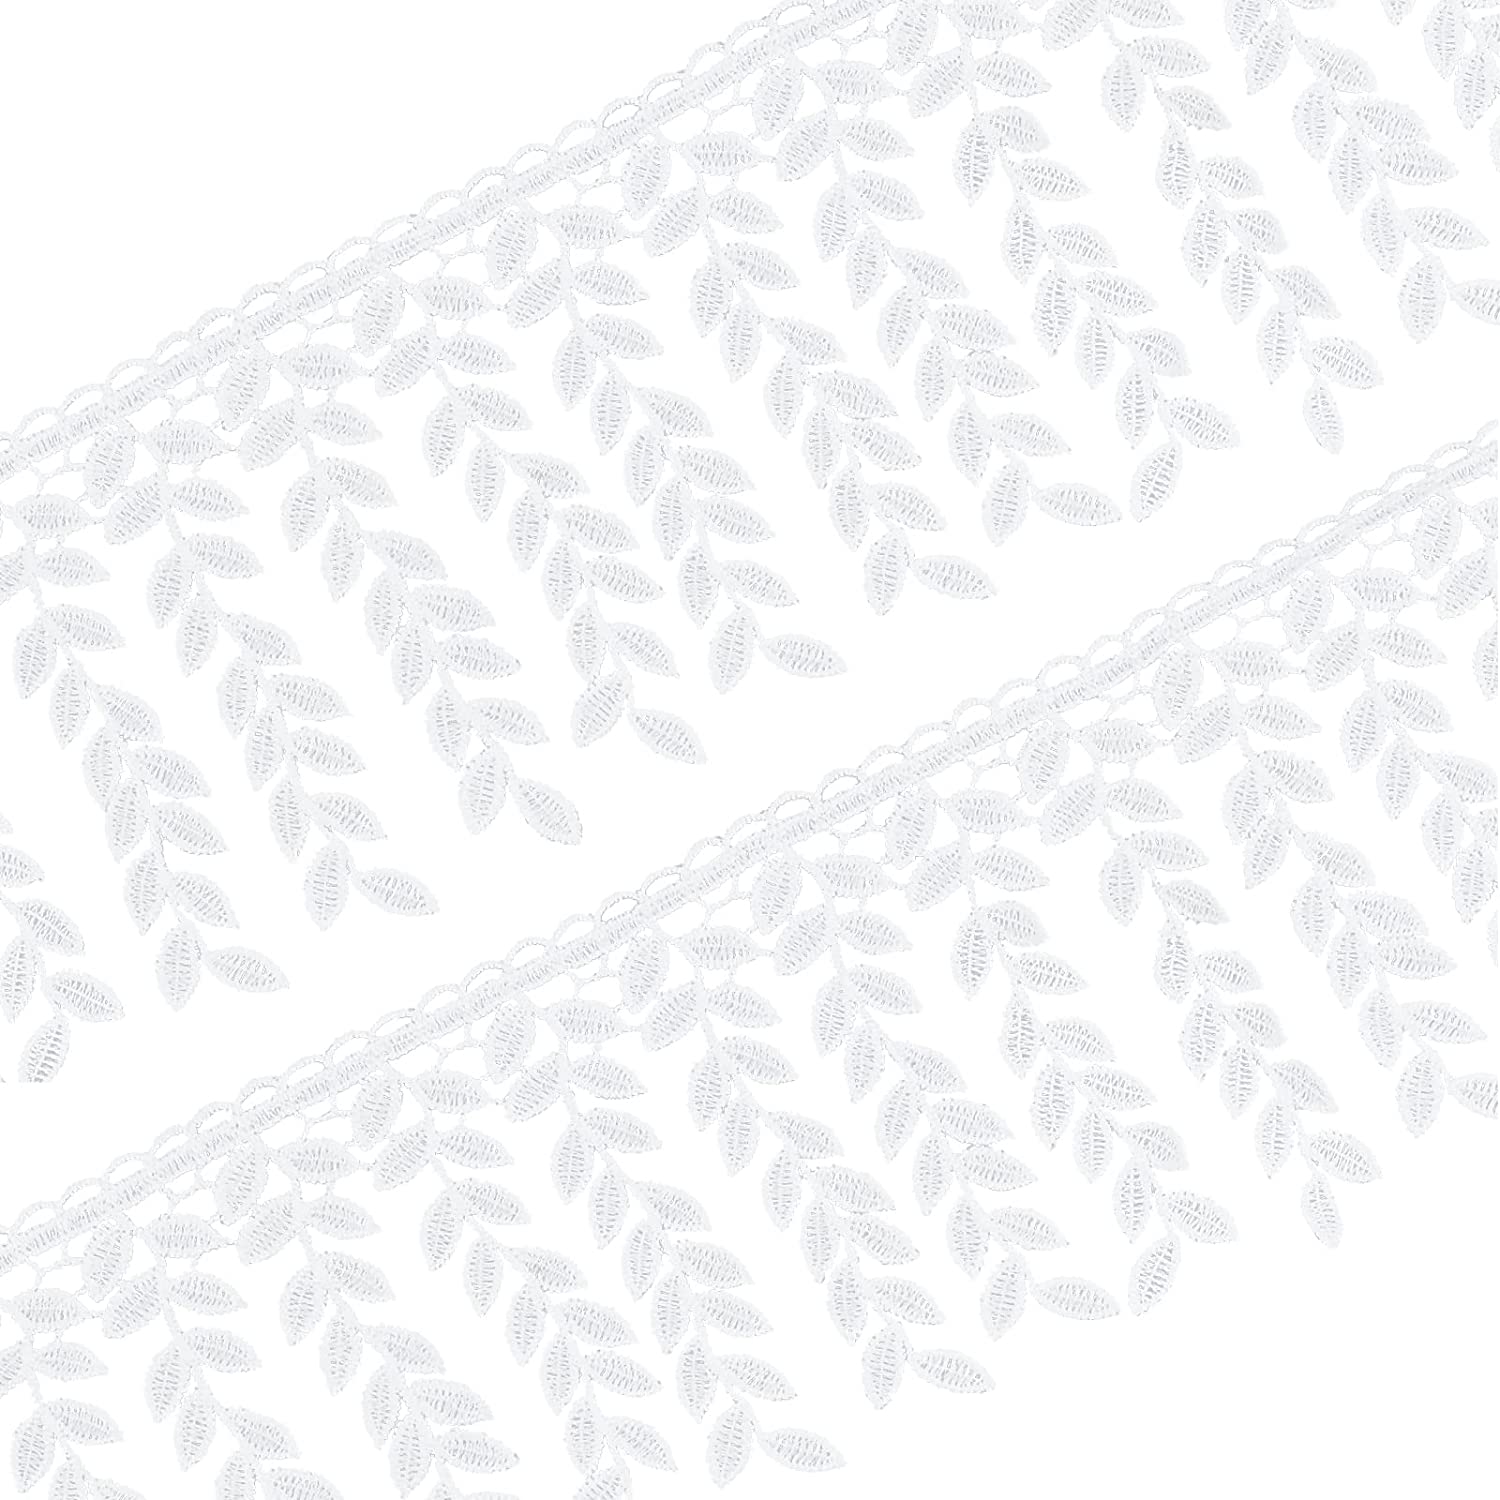 CRASPIRE 1 Bag 5 Yards Lace Ribbon Cotton White Lace Trim 4.33